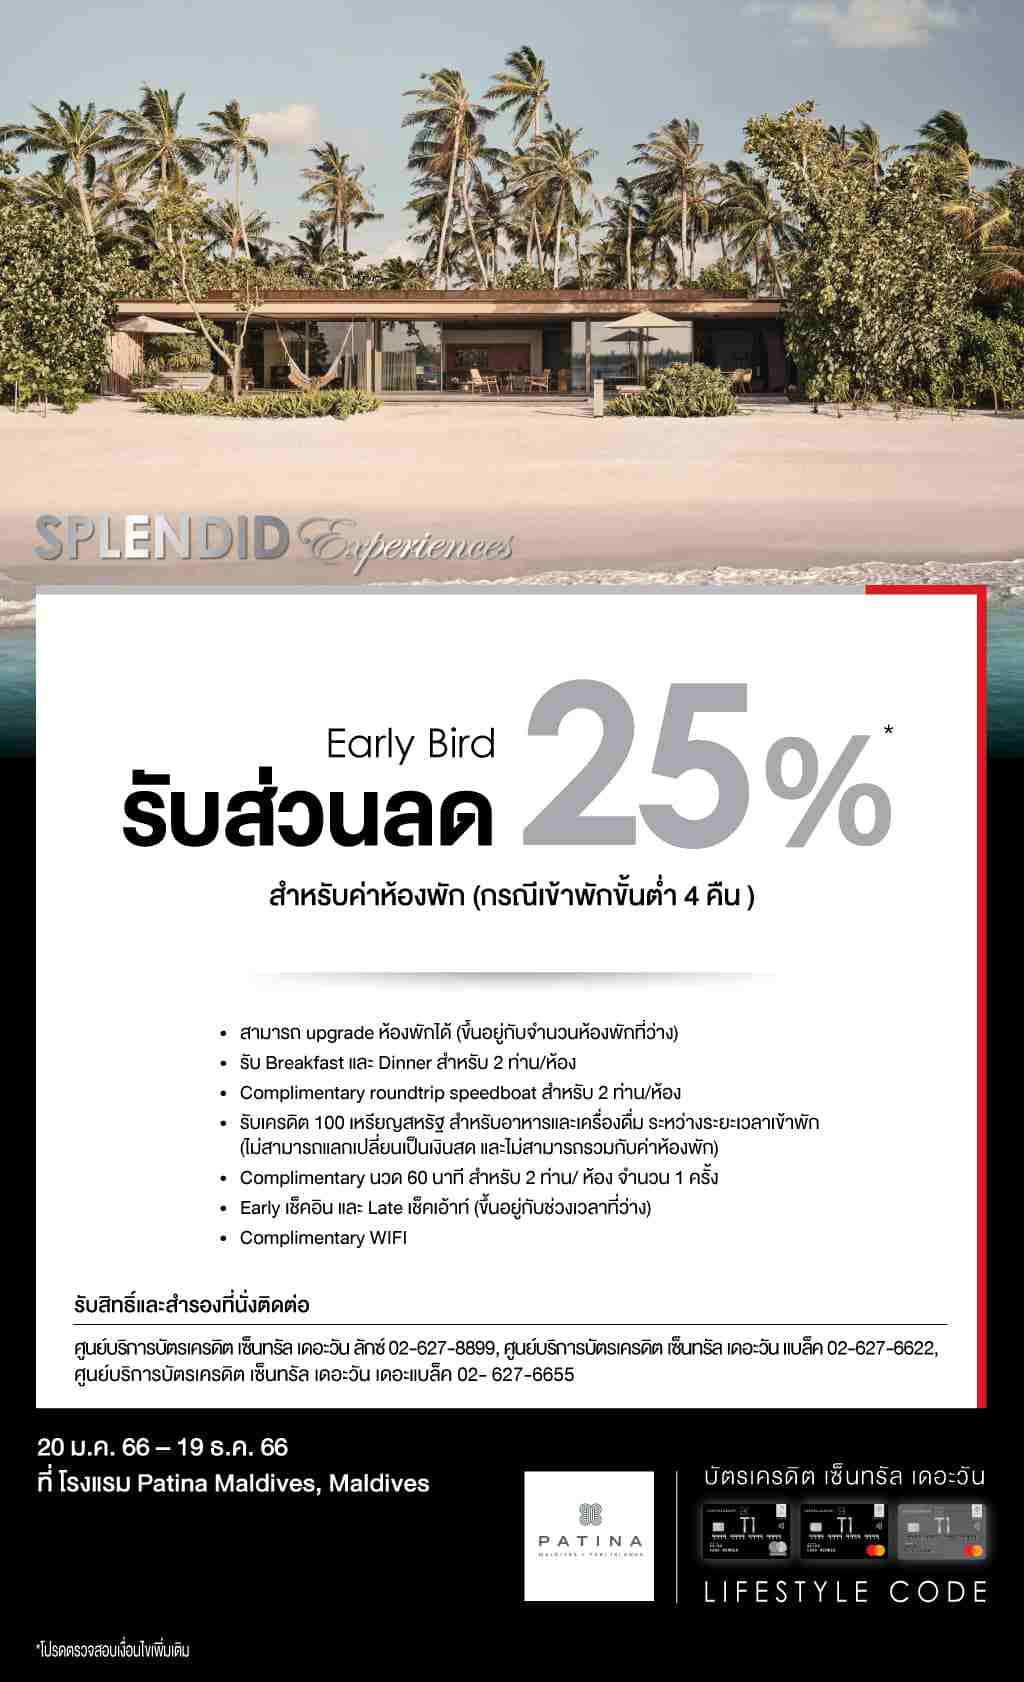 Early Bird รับส่วนลด 25%* ที่โรงแรม  Patina Maldives, Maldives | บัตรเครดิต เซ็นทรัล เดอะวัน เรดซ์ (ลิมิเต็ด) | สมัครบัตรเครดิตออนไลน์ | Central The 1 REDZ Credit Card (limited)